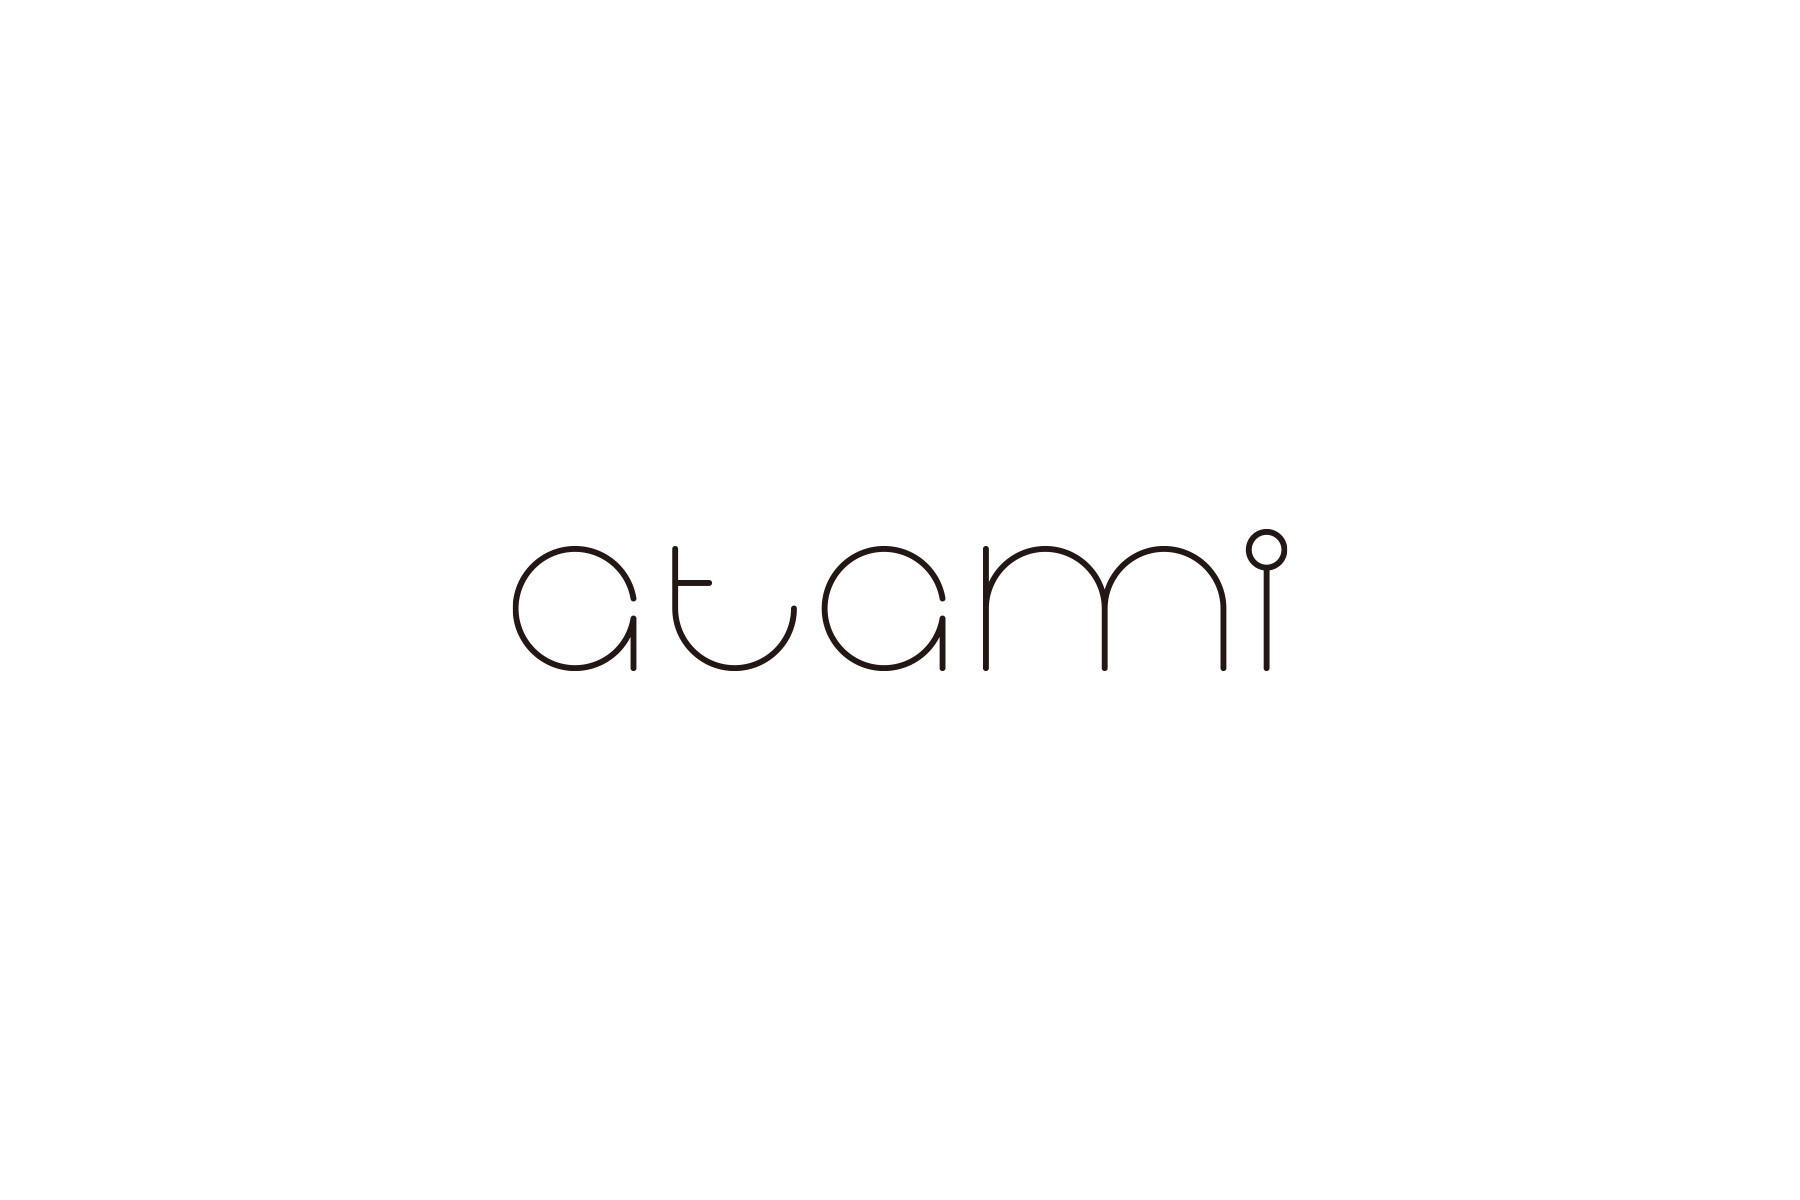 atami's image